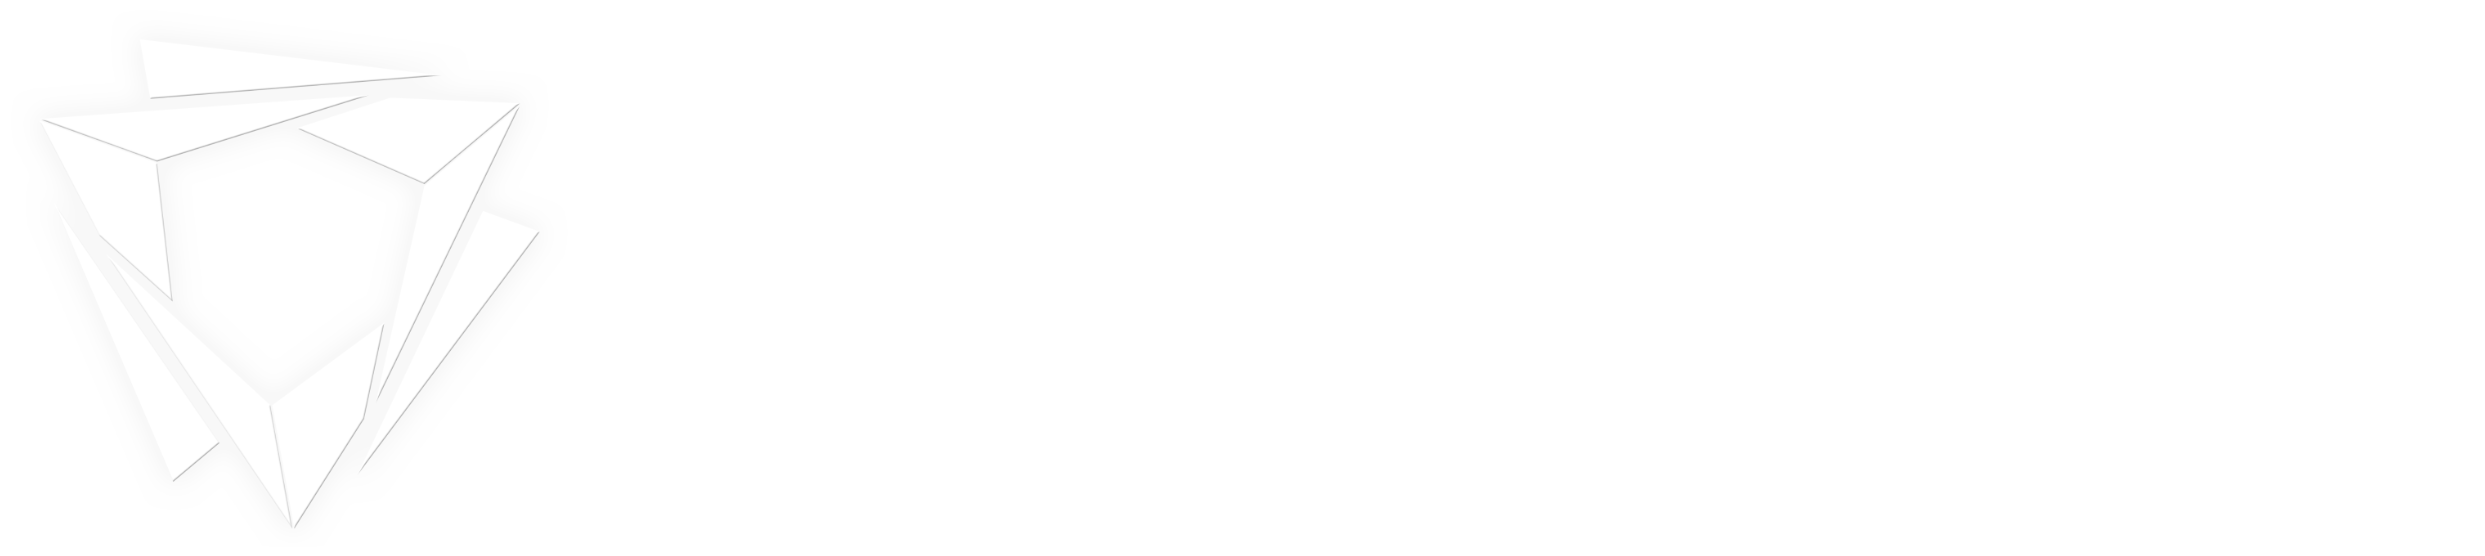 logo VR2Planets